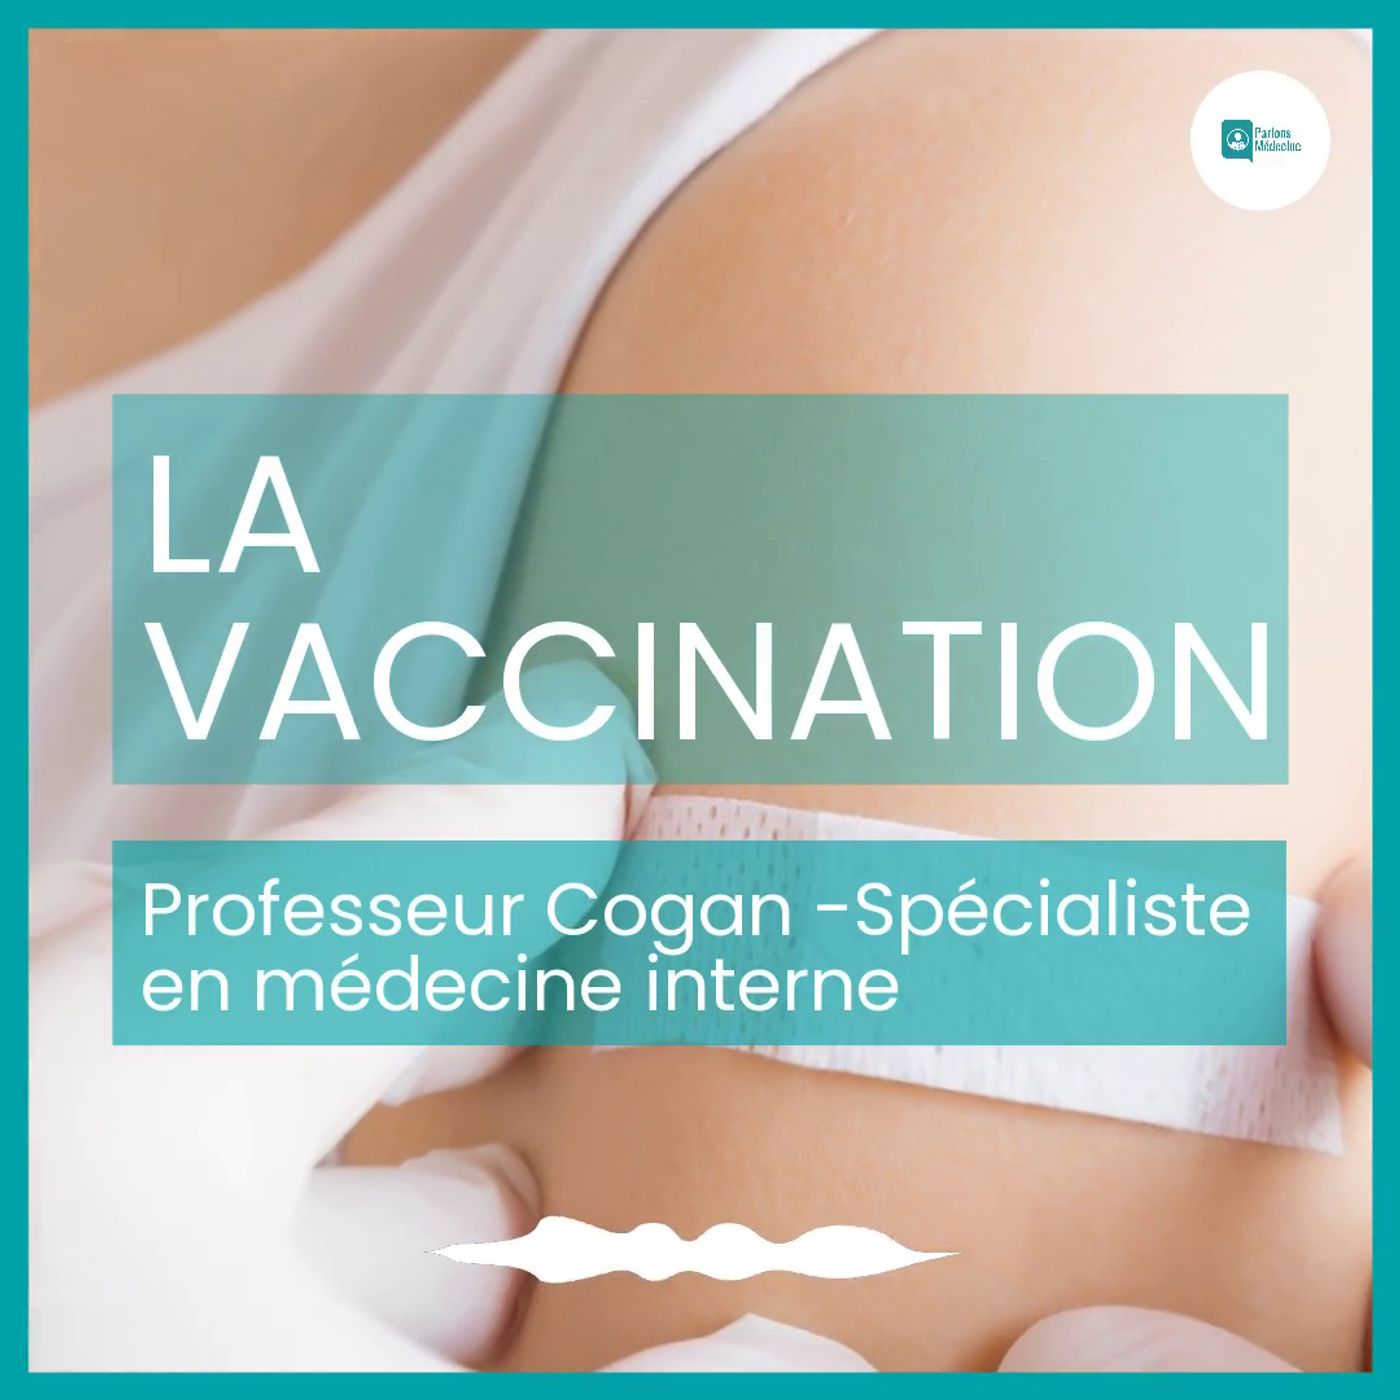 La vaccination - Professeur Cogan - Spécialiste en médecine interne